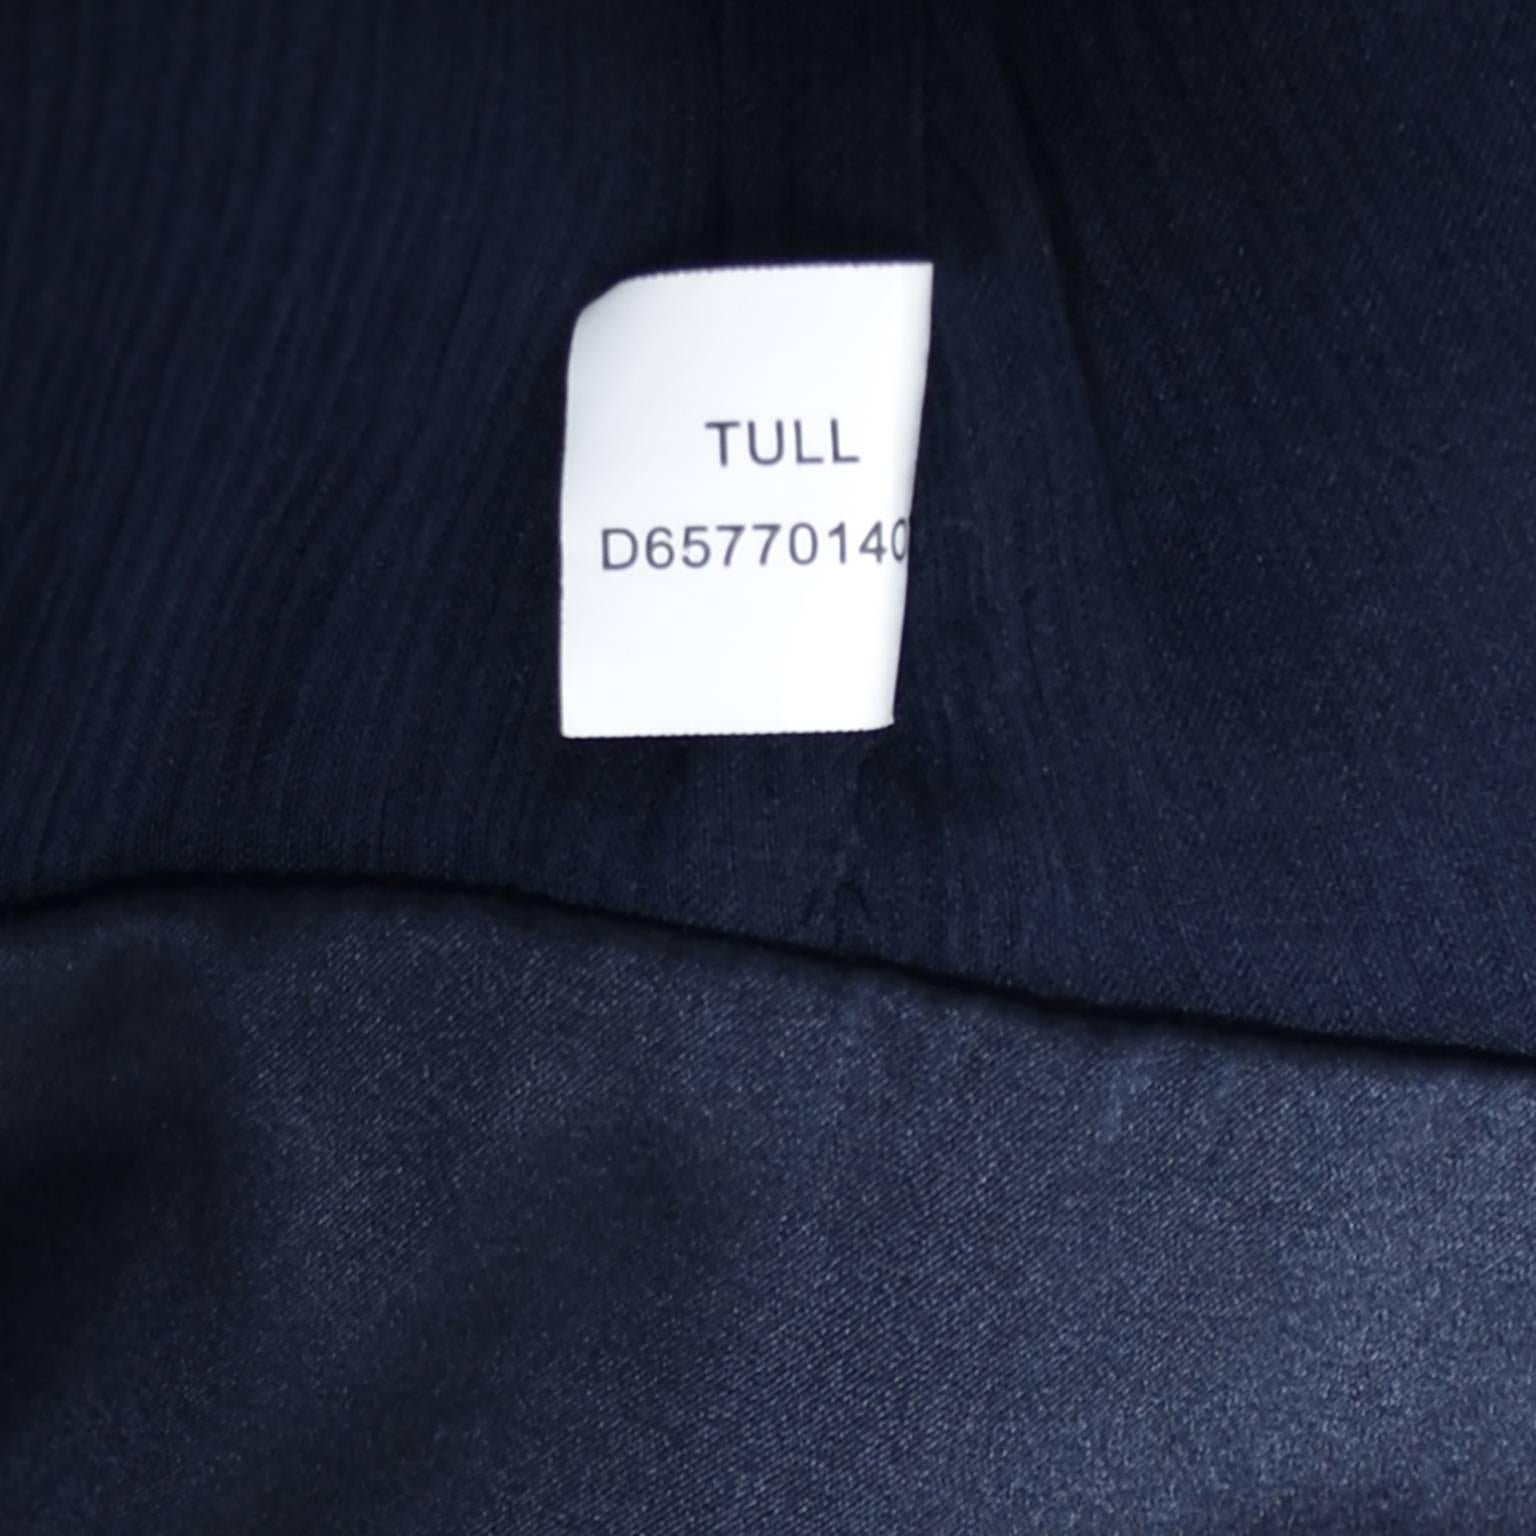 Diane von Furstenberg Silk Chiffon Tull Dress Navy Blue Draping Size 8 1